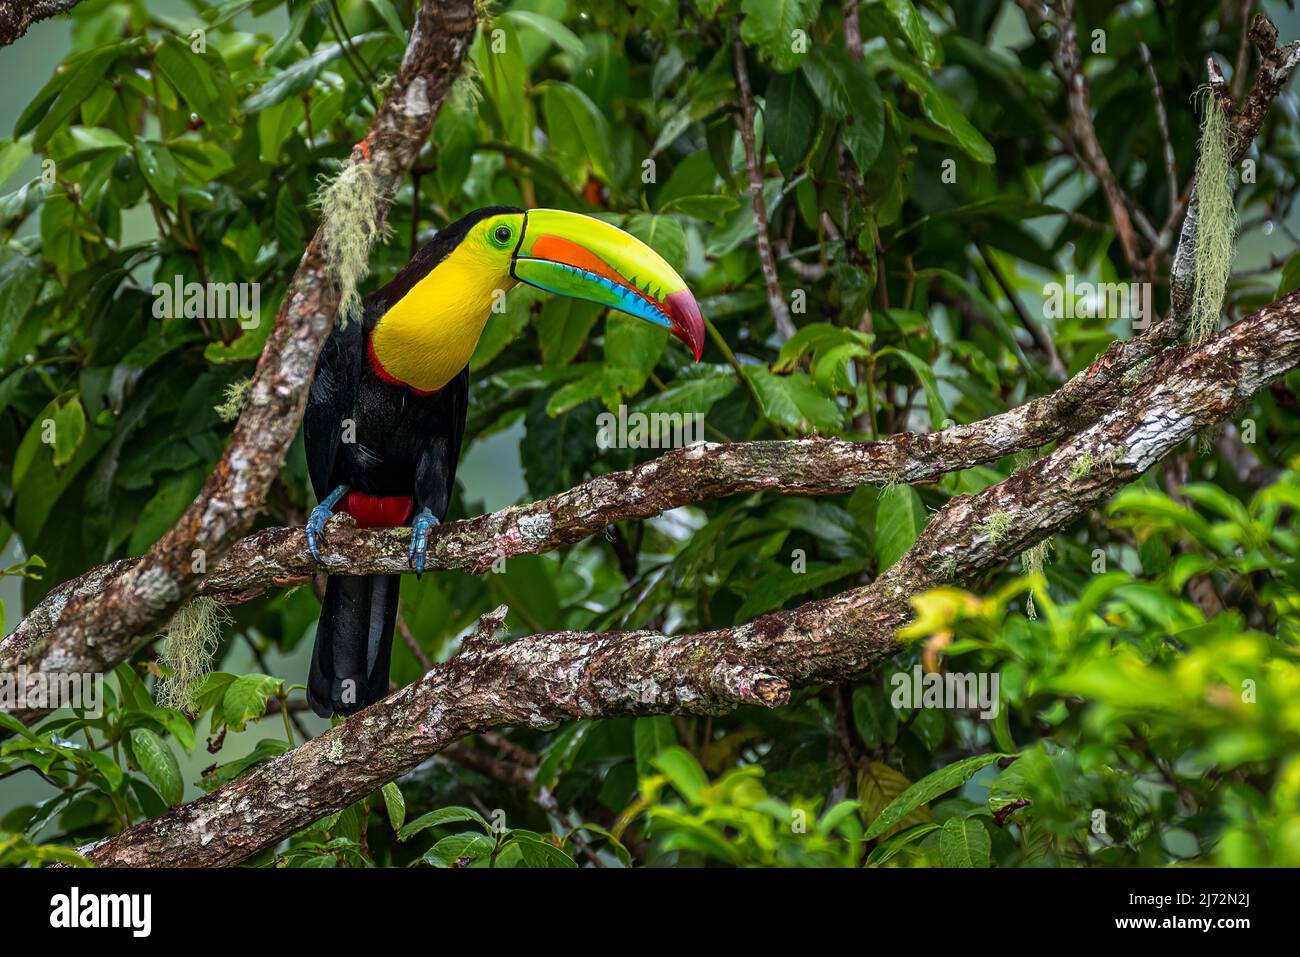 Keel-billed toucan (Ramphastos sulfuratus), image taken in Panamas rain forest Stock Photo